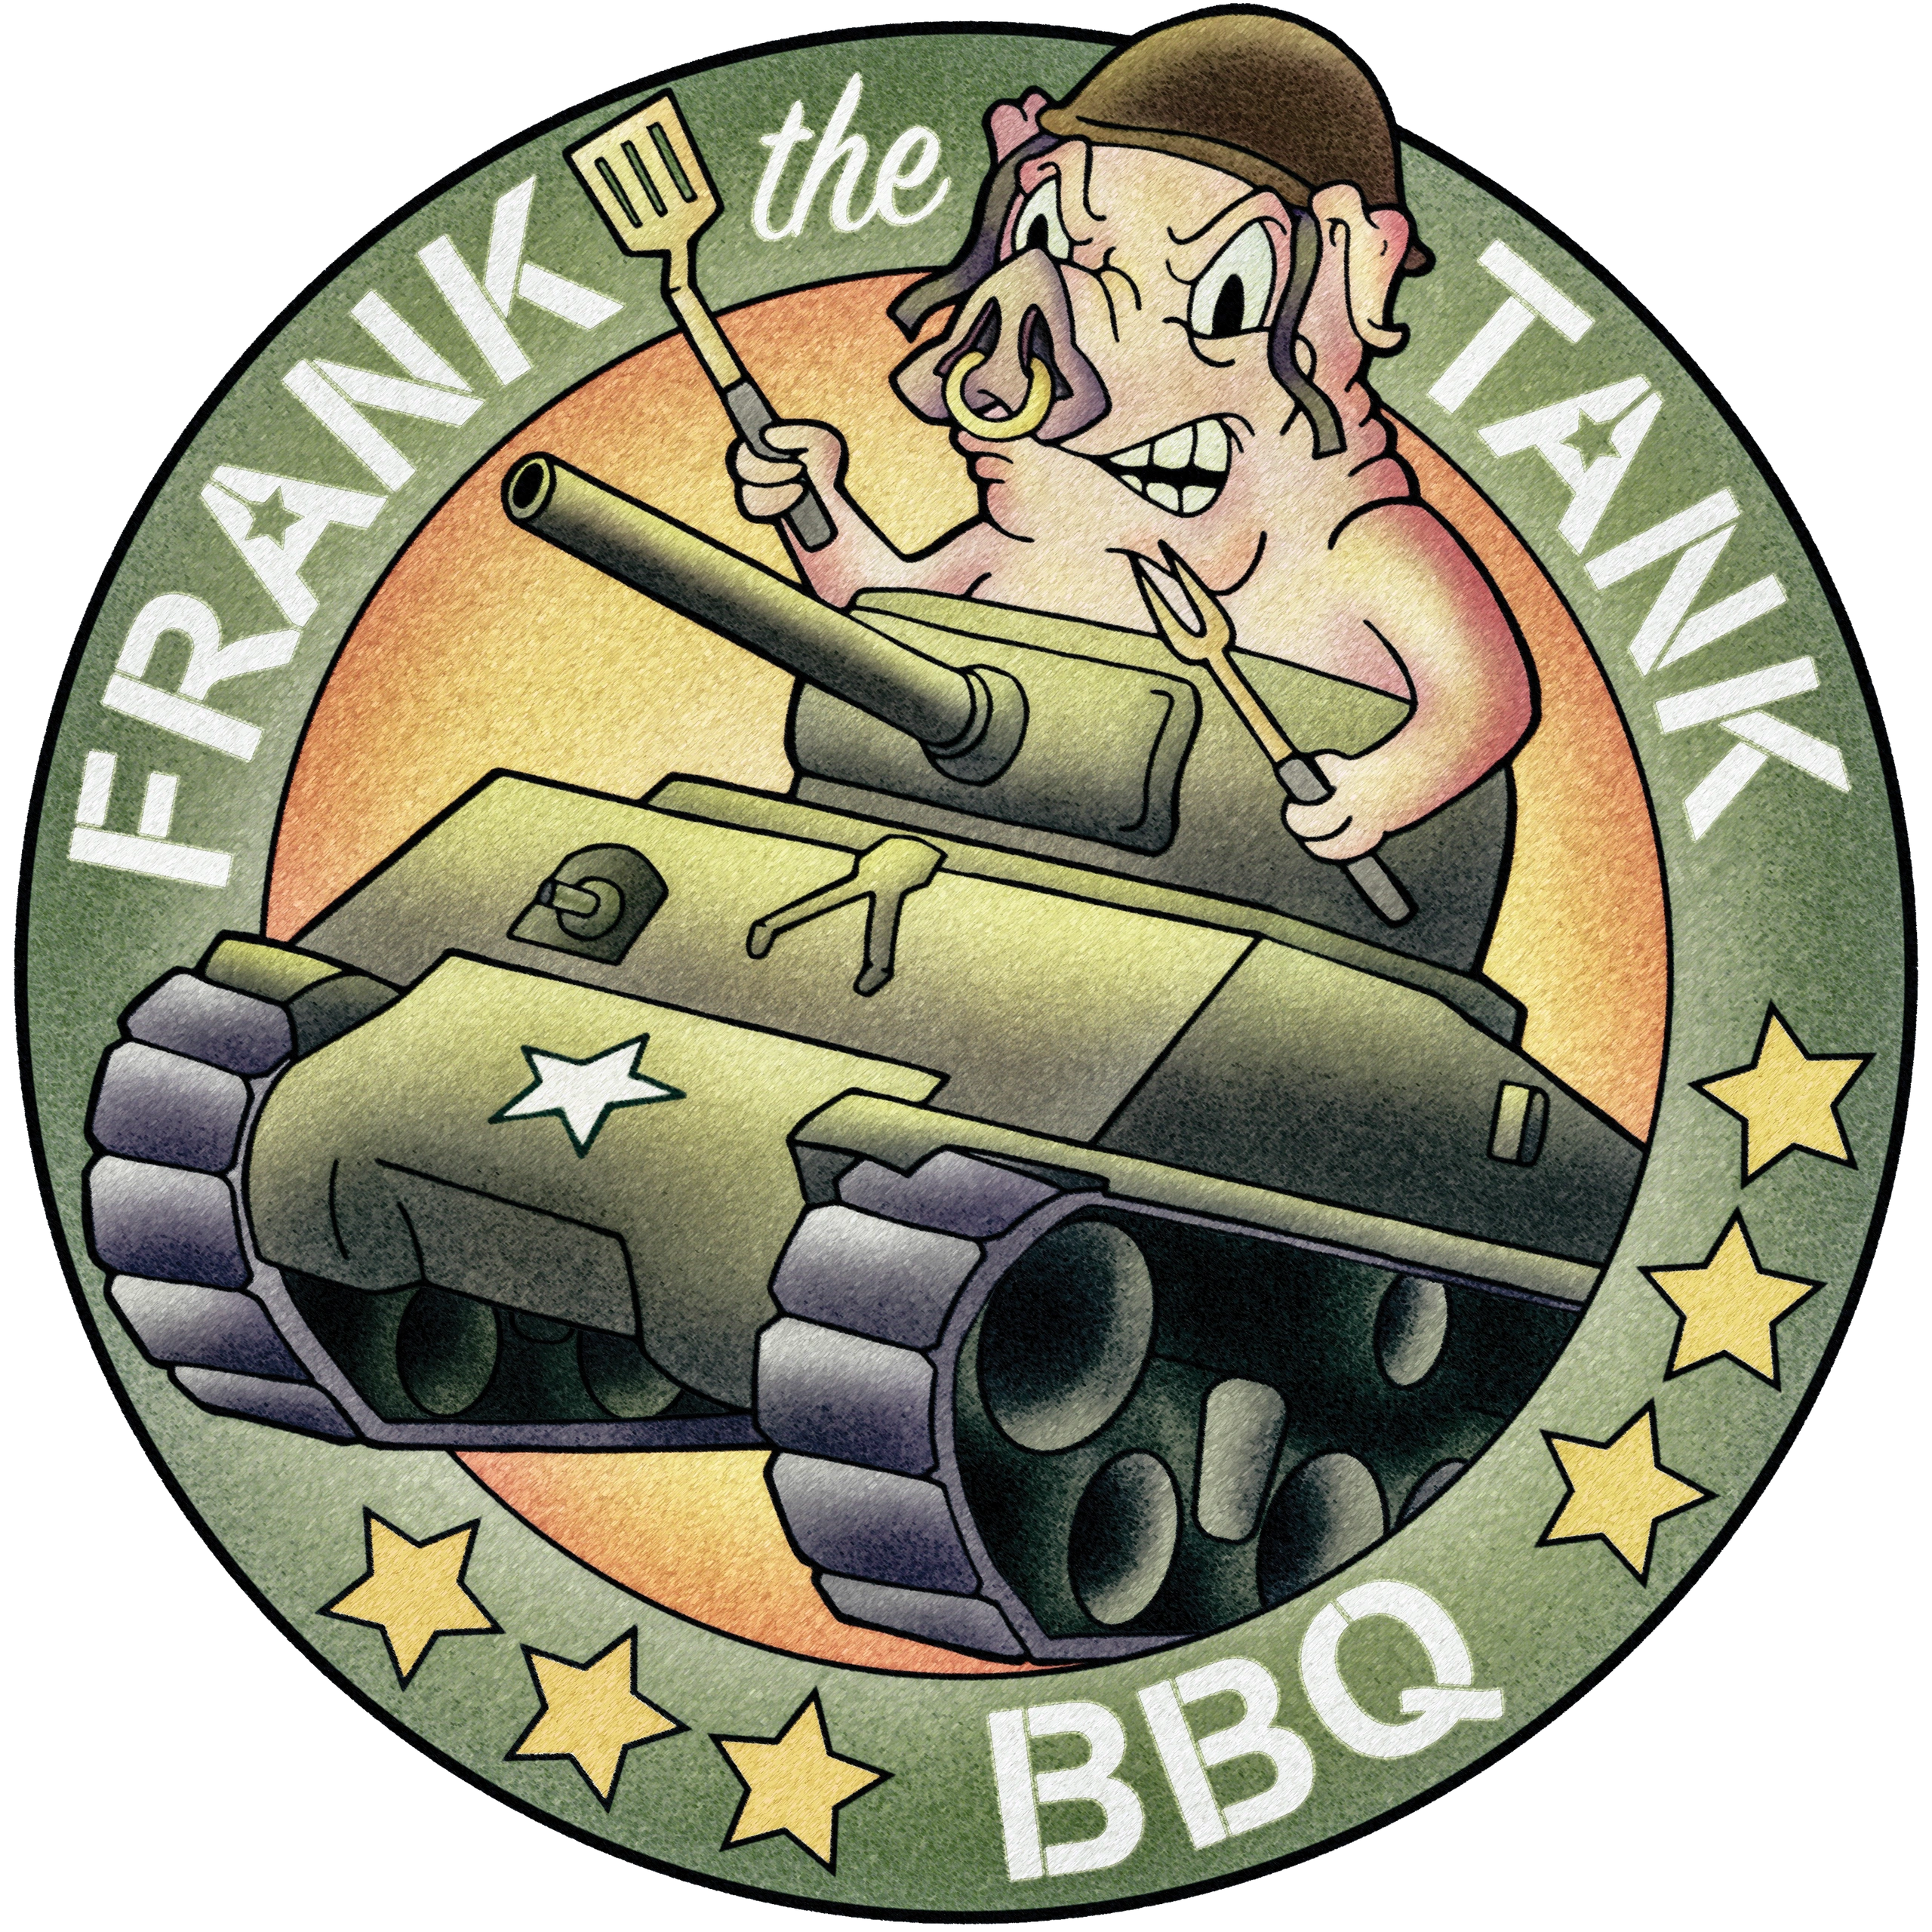 Frank The Tank BBQ